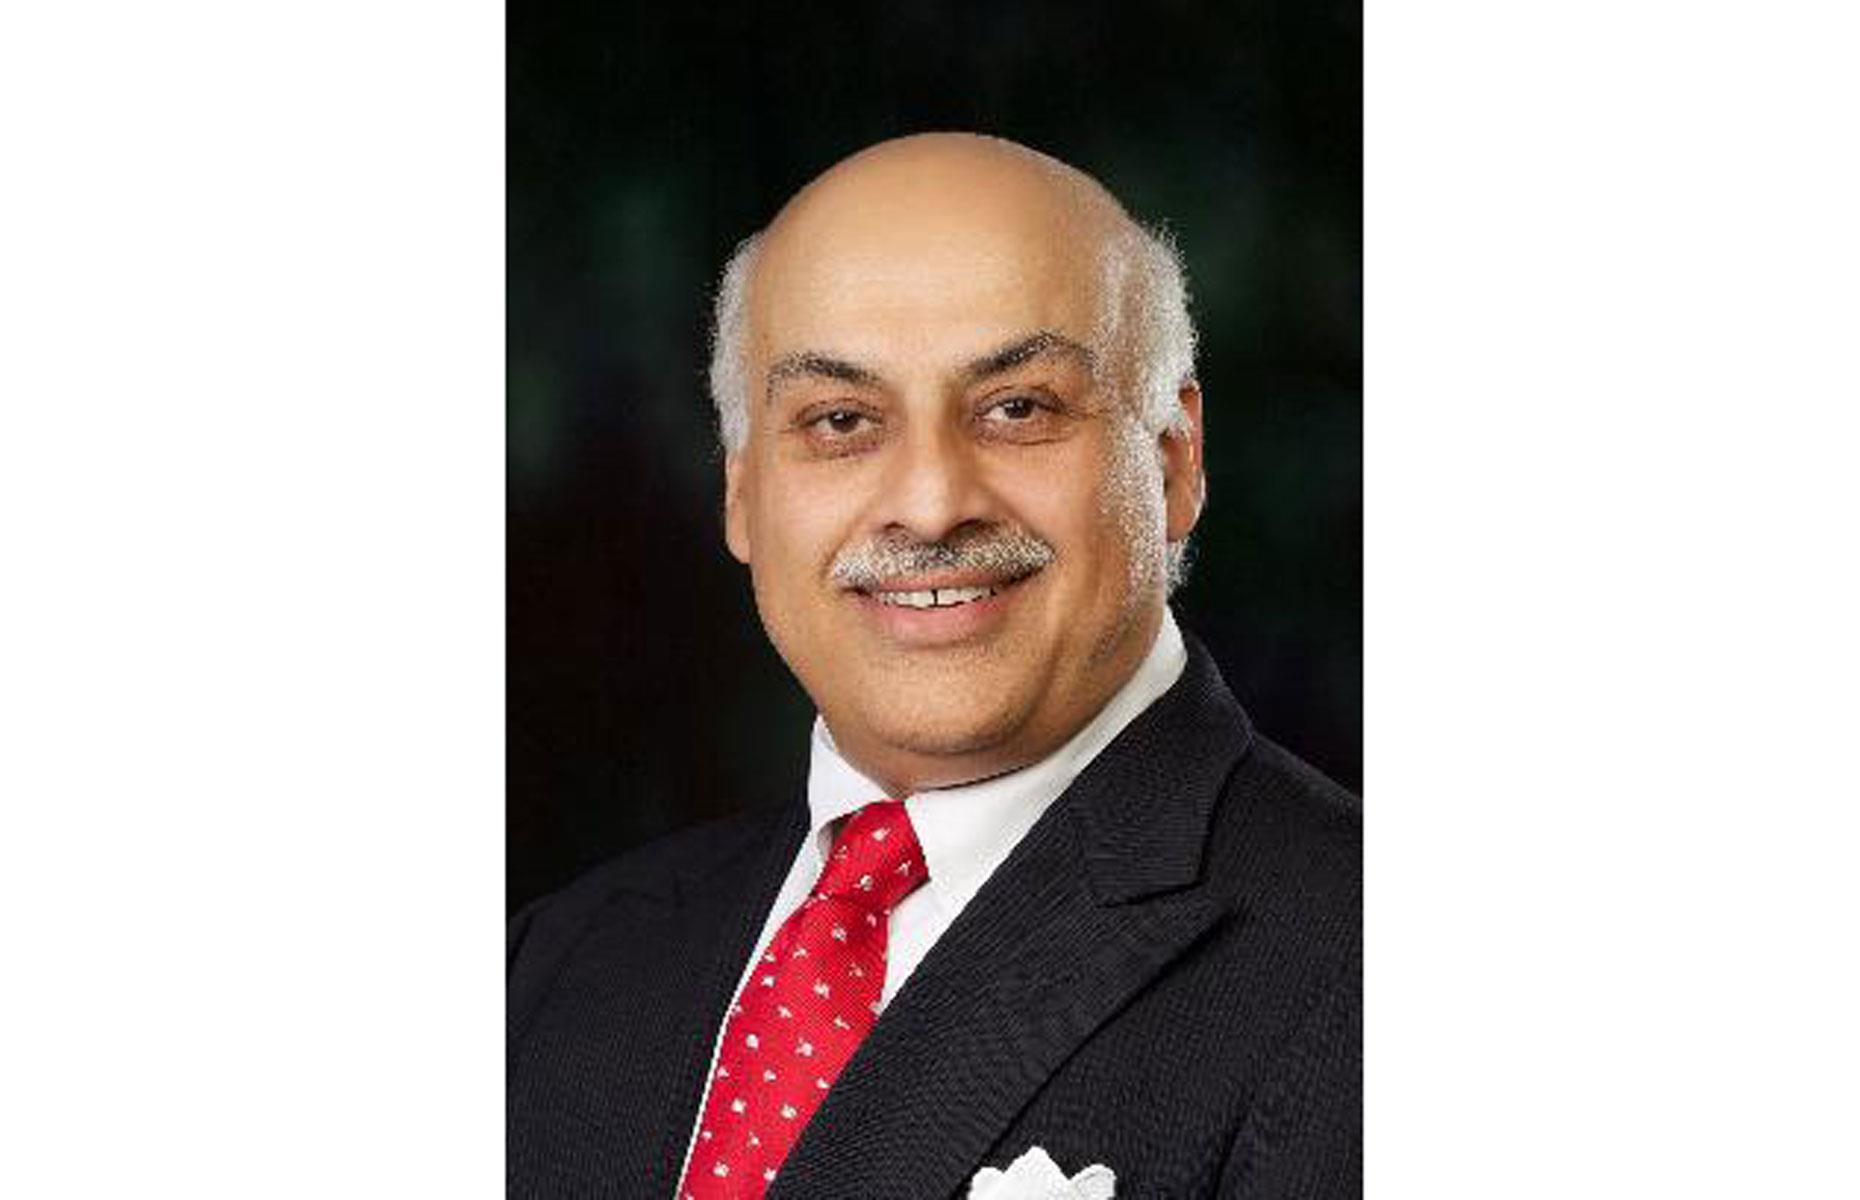 12. Vivek Chaand Sehgal: $5.5 billion